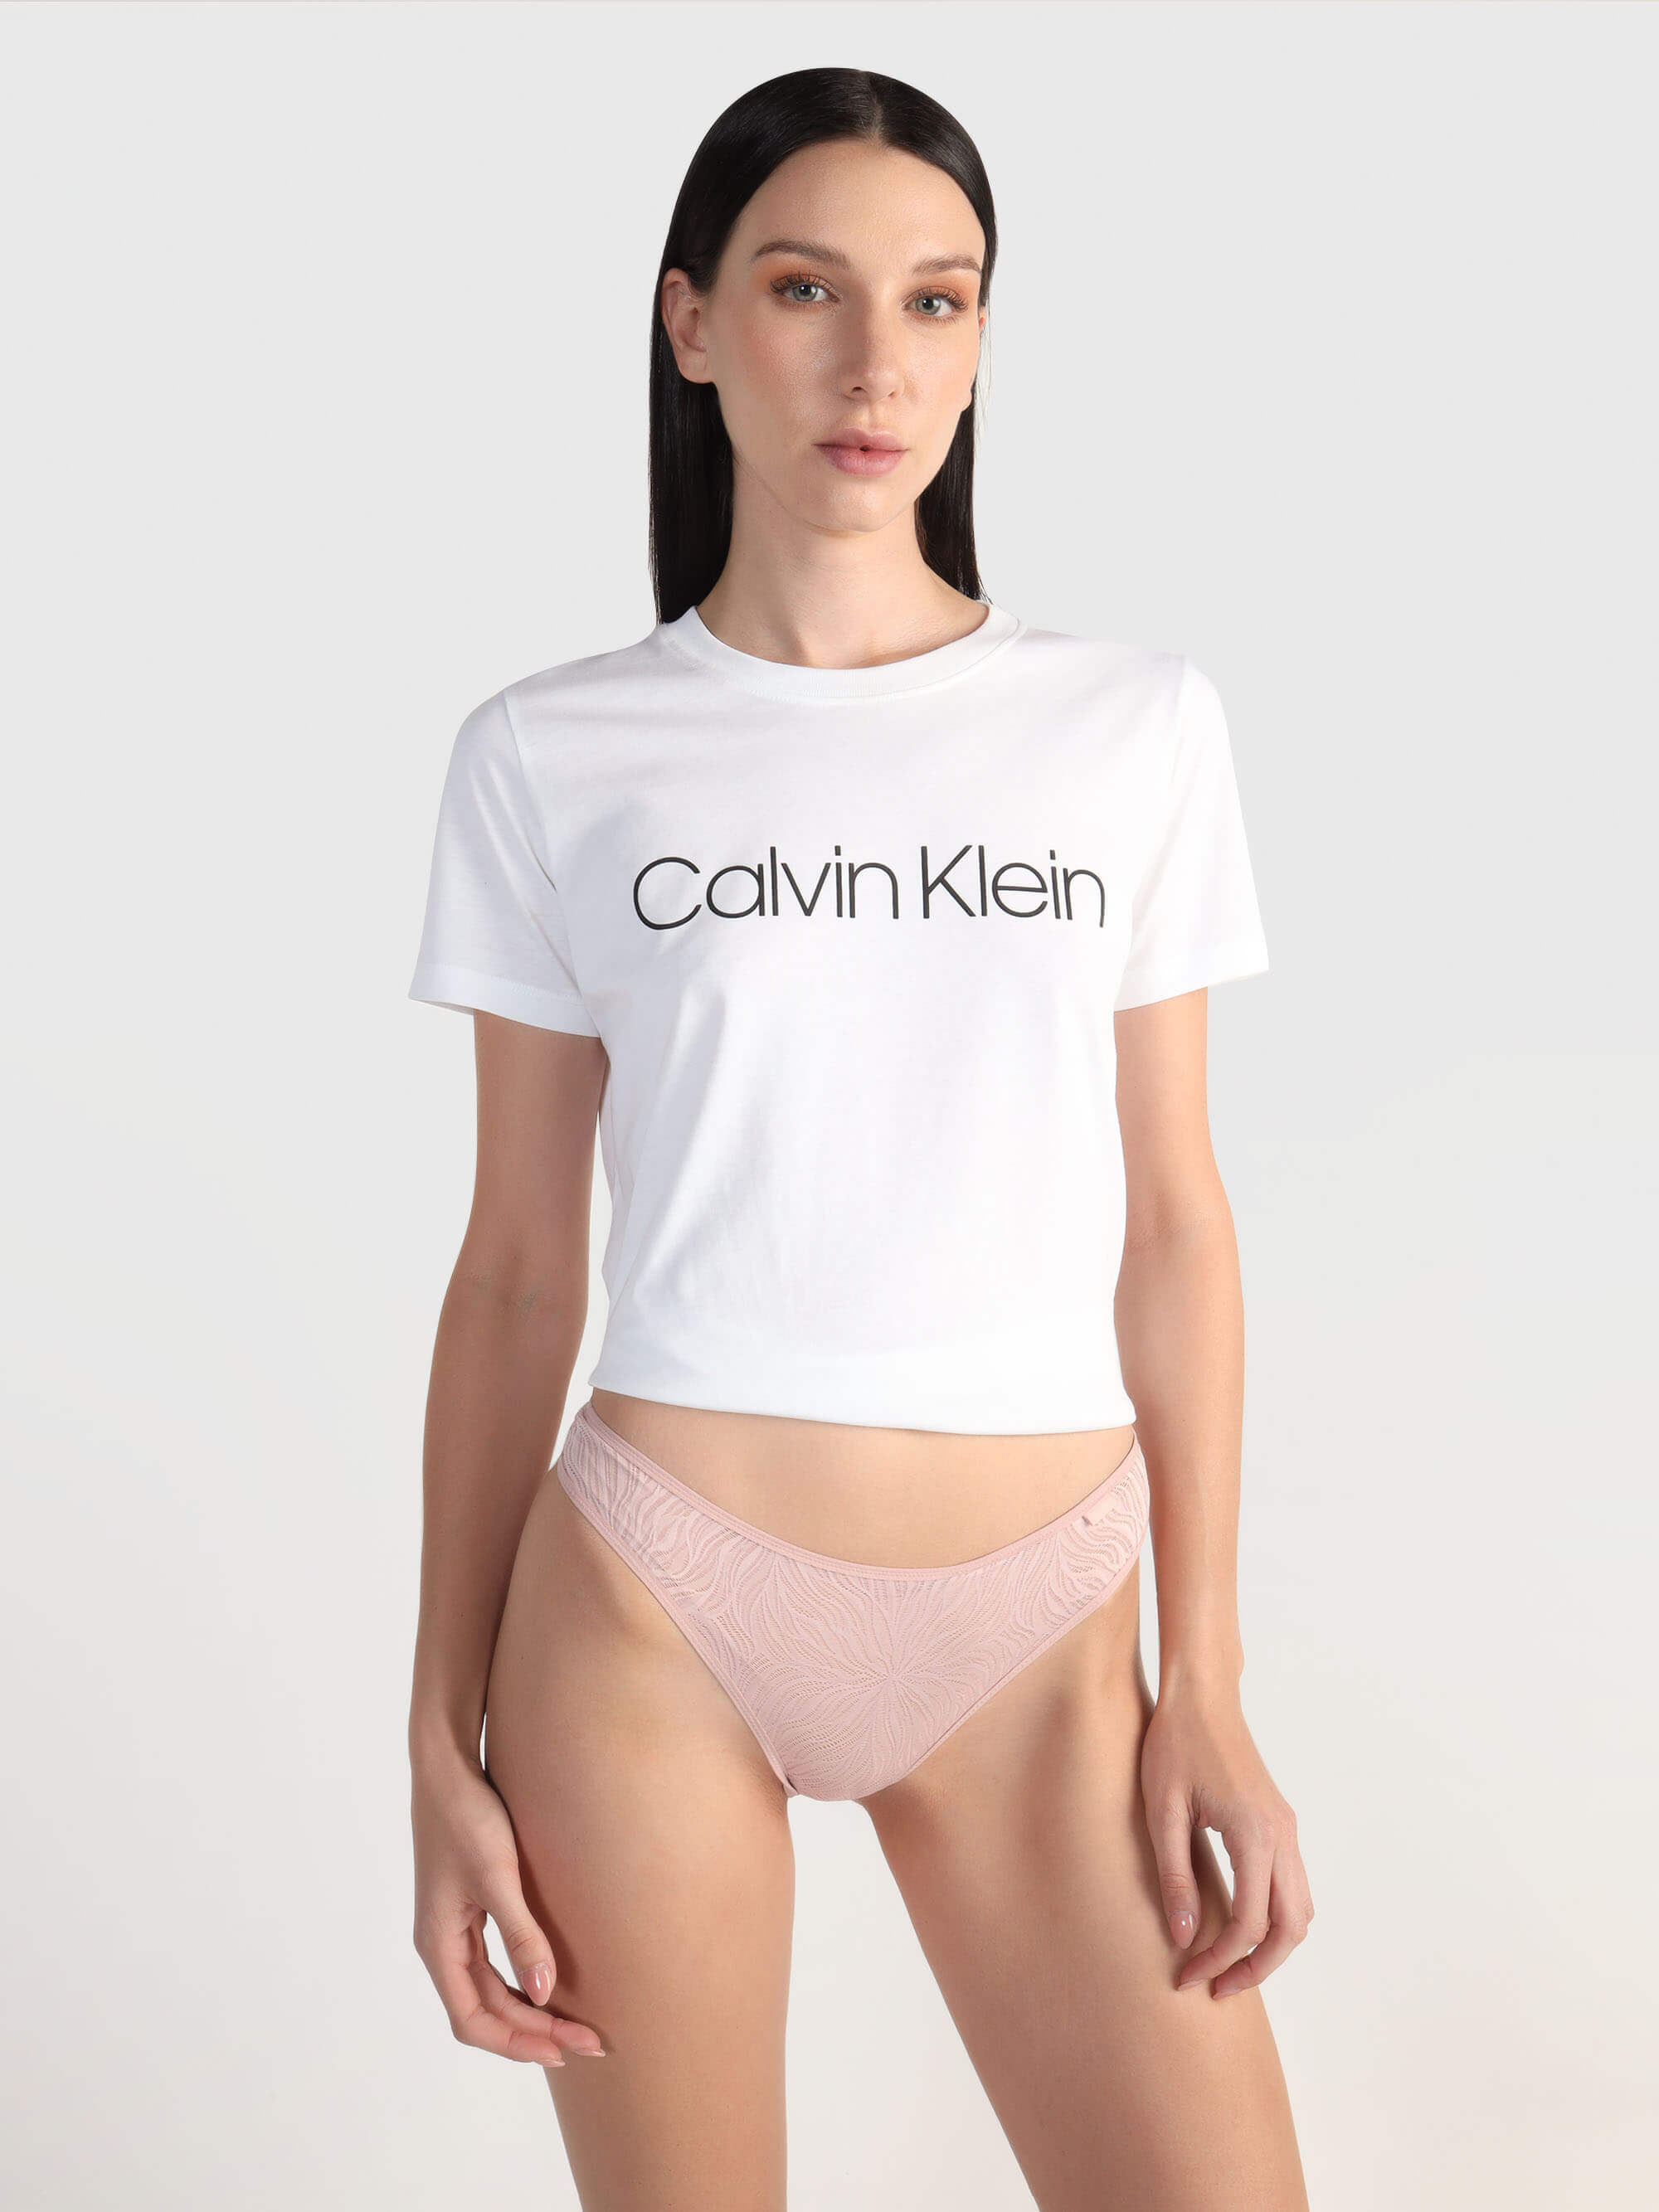 Tanga Calvin Klein Sheer Marquisette Lace Mujer Rosa